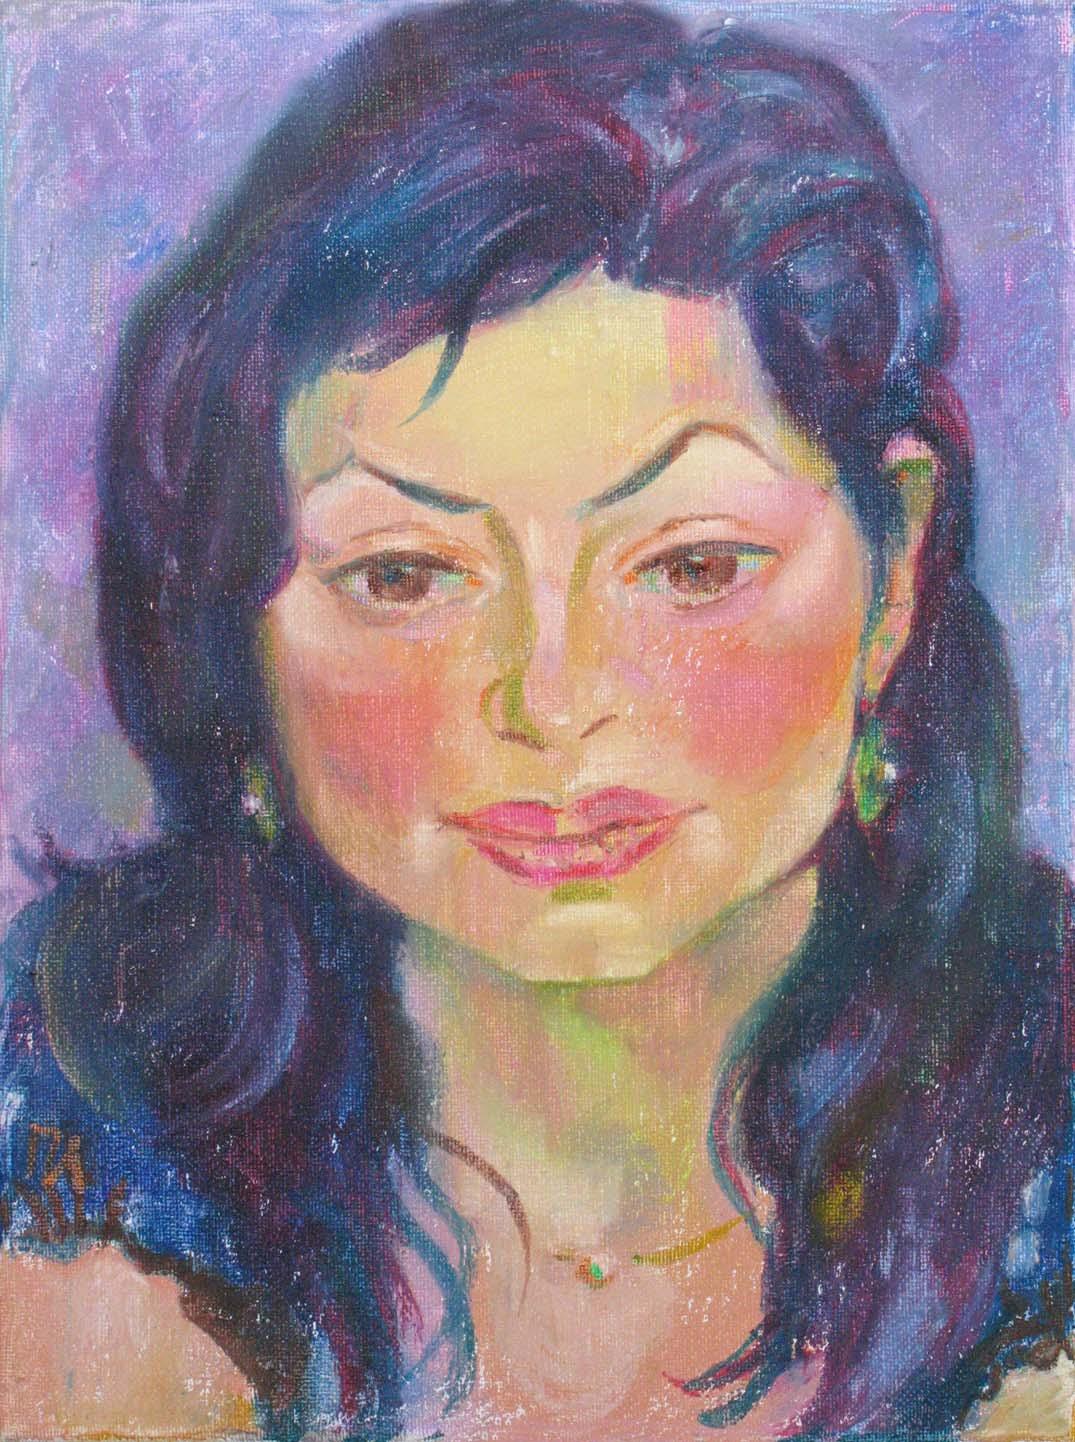 IRA, canvas, oil pastel, 35  27 cm, 2010



